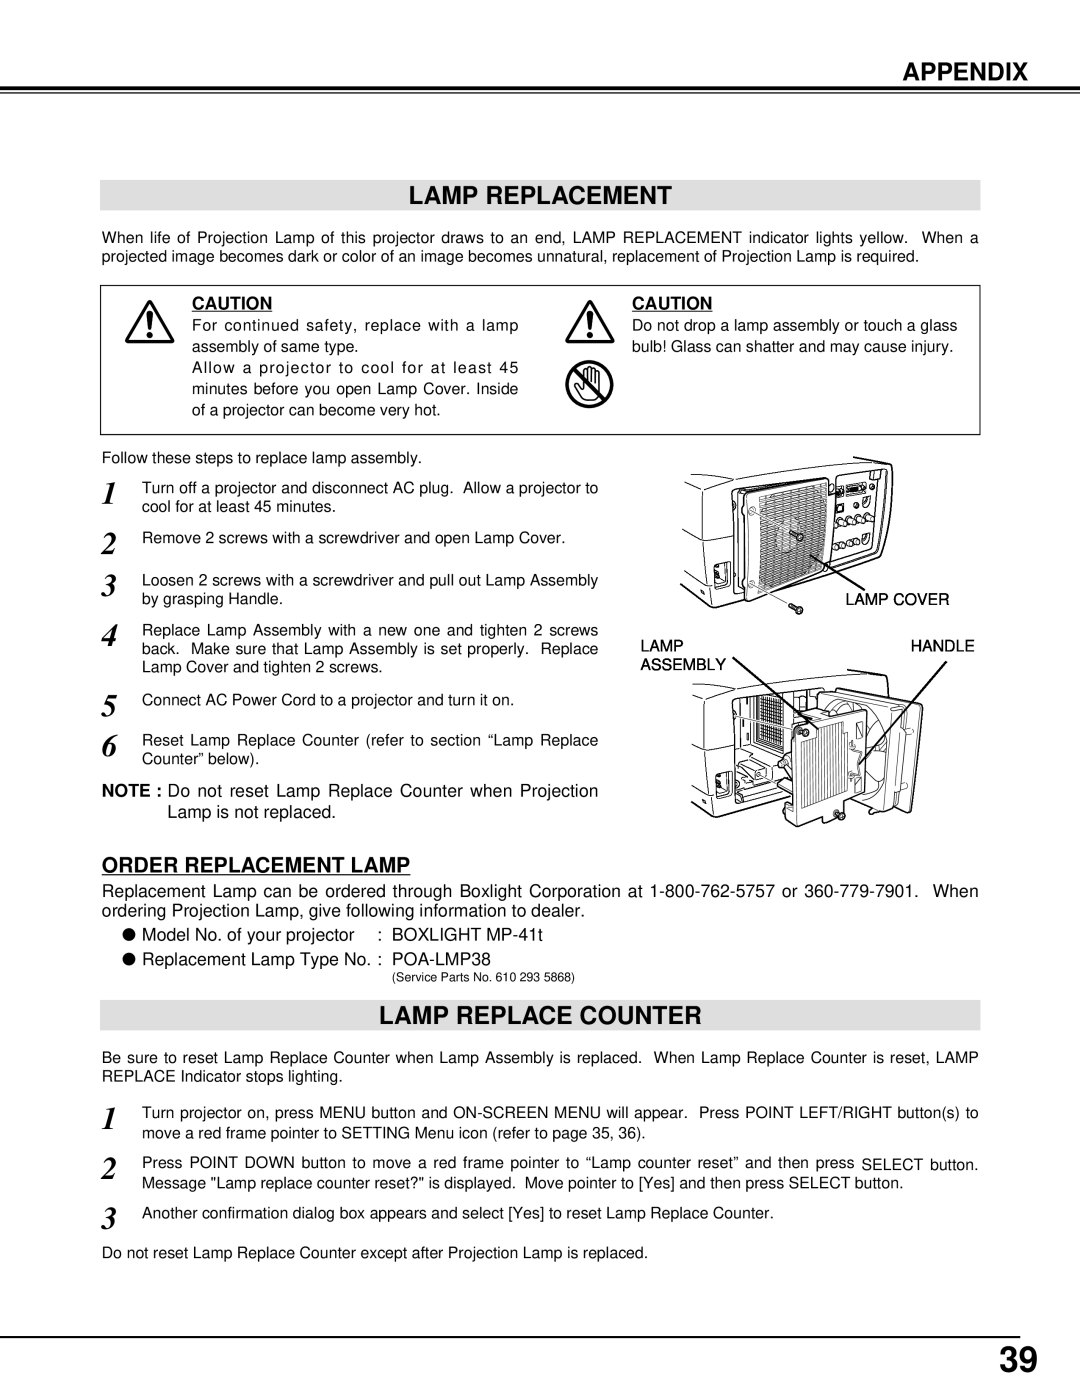 BOXLIGHT MP-41T manual Appendix Lamp Replacement, Lamp Replace Counter, Order Replacement Lamp 